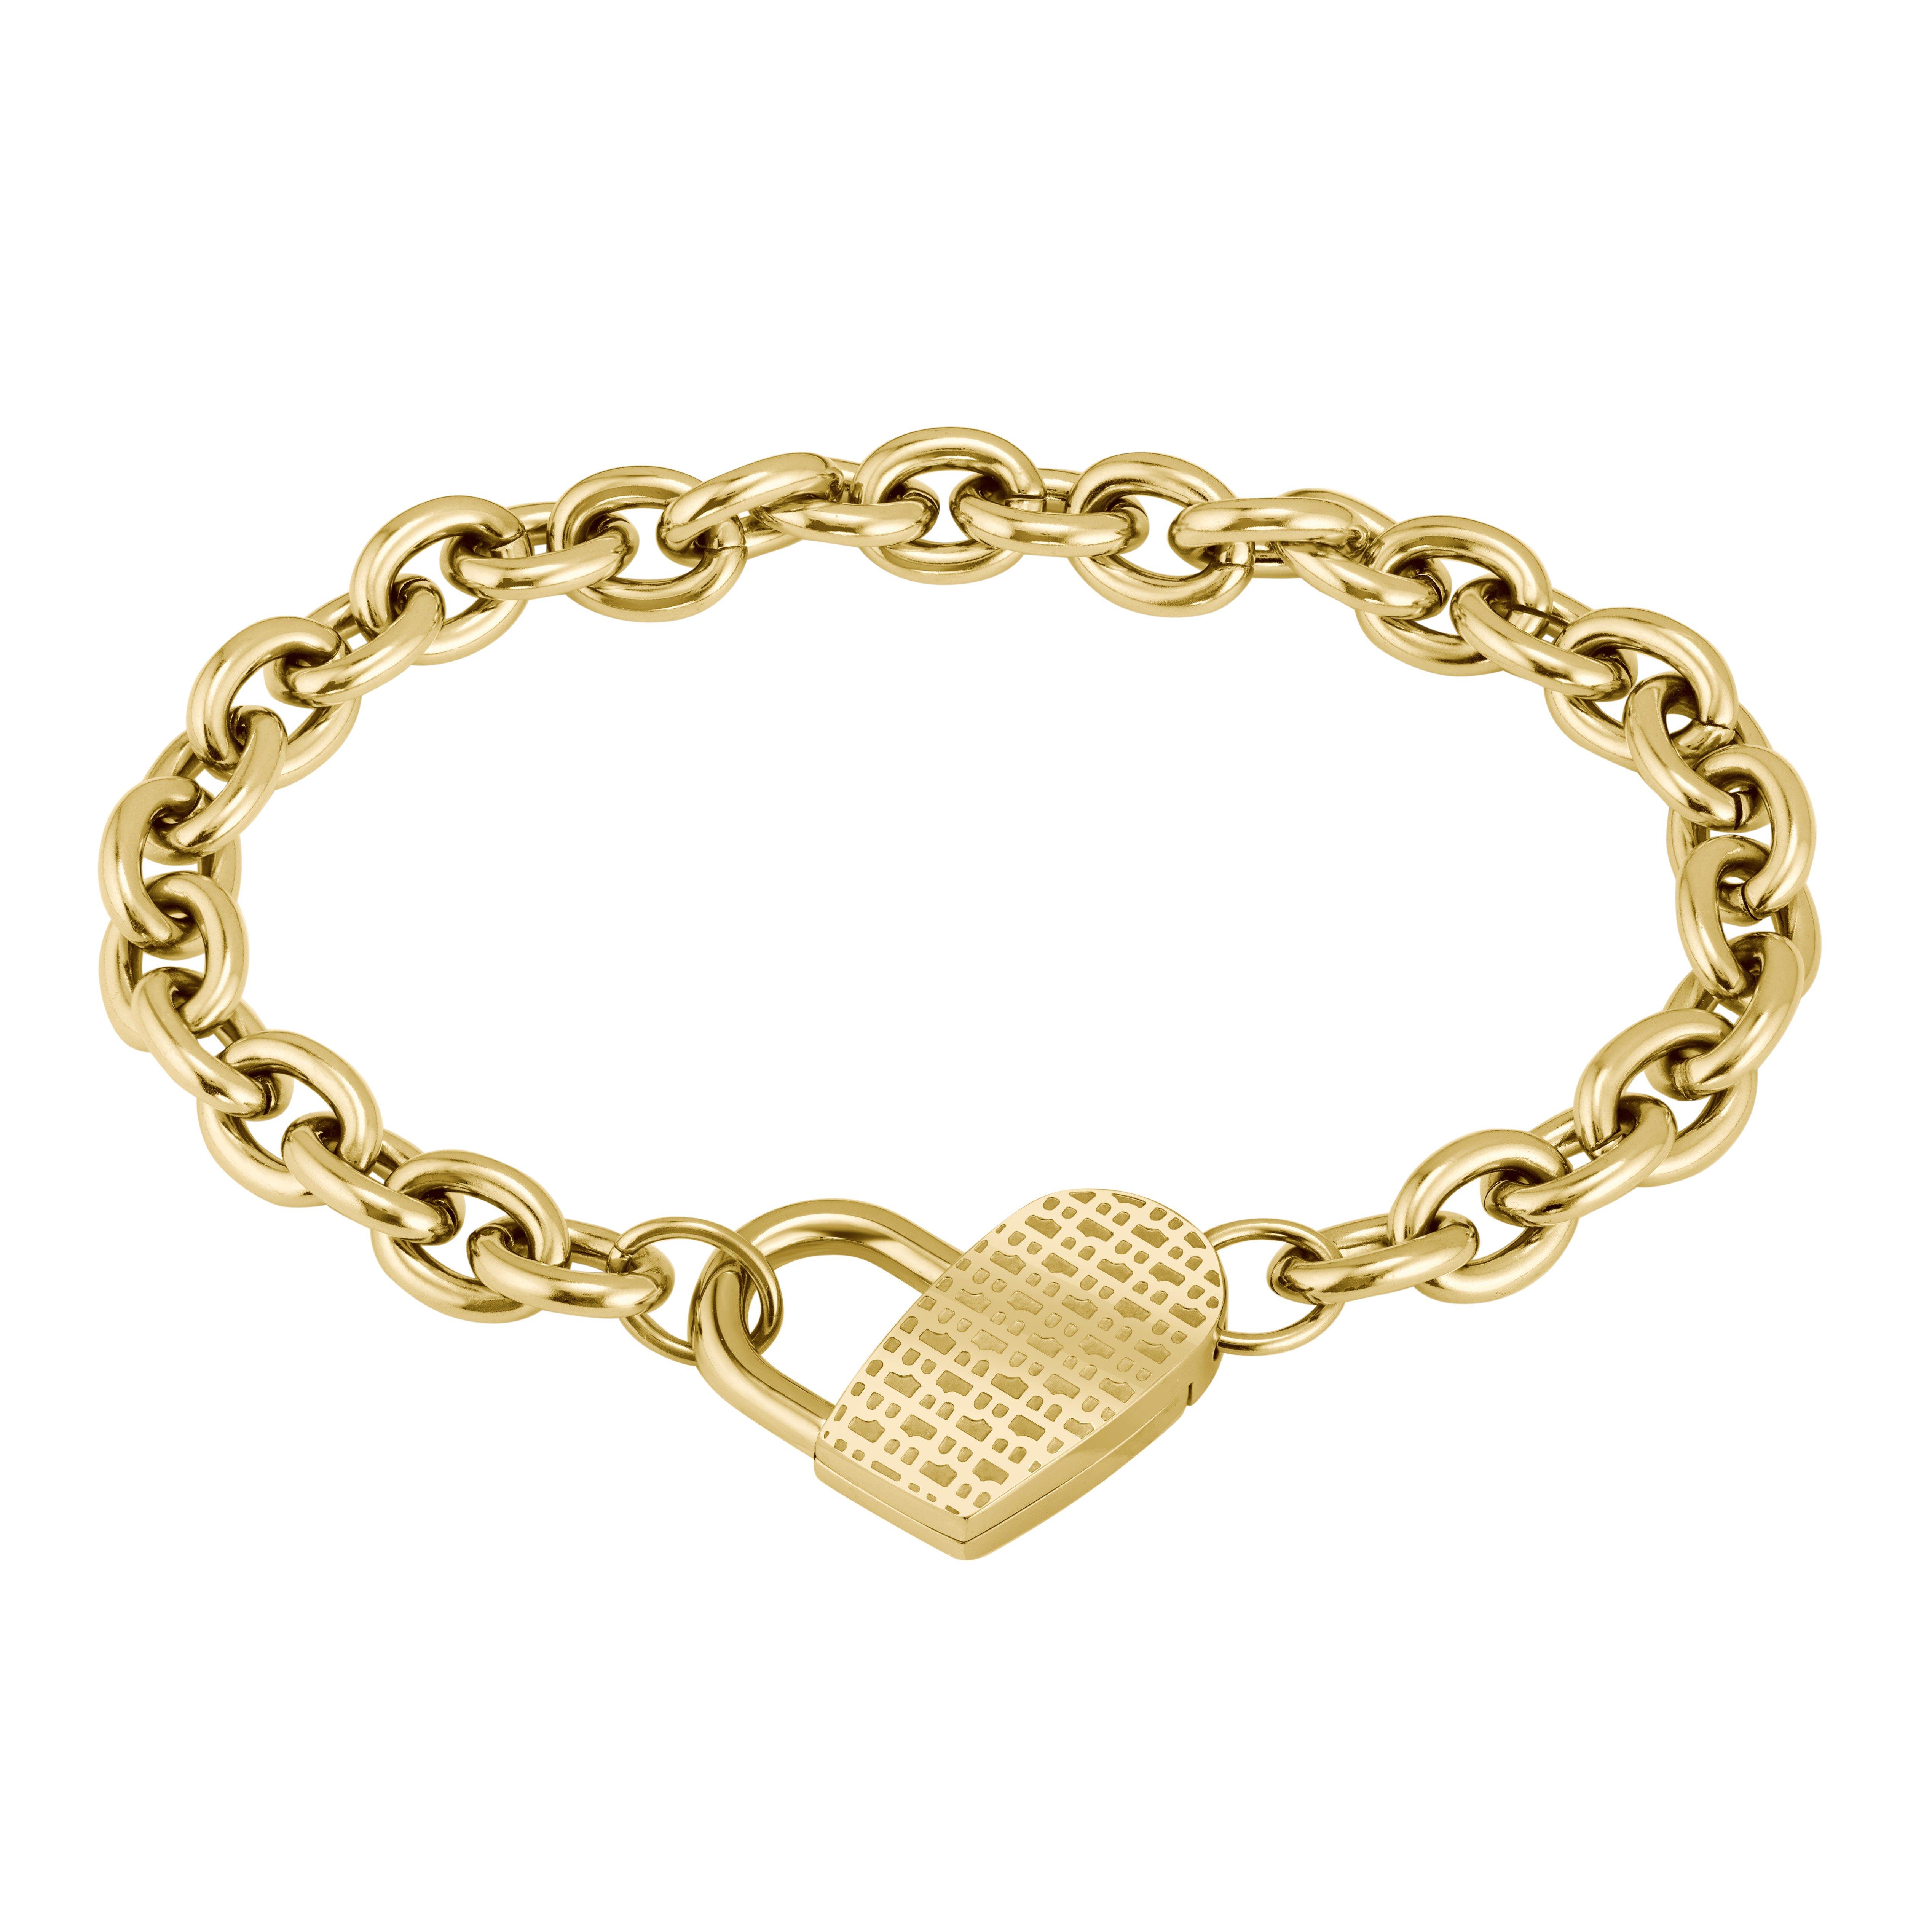 BOSS Gold Tone Bracelet | 0138543 | Beaverbrooks the Jewellers